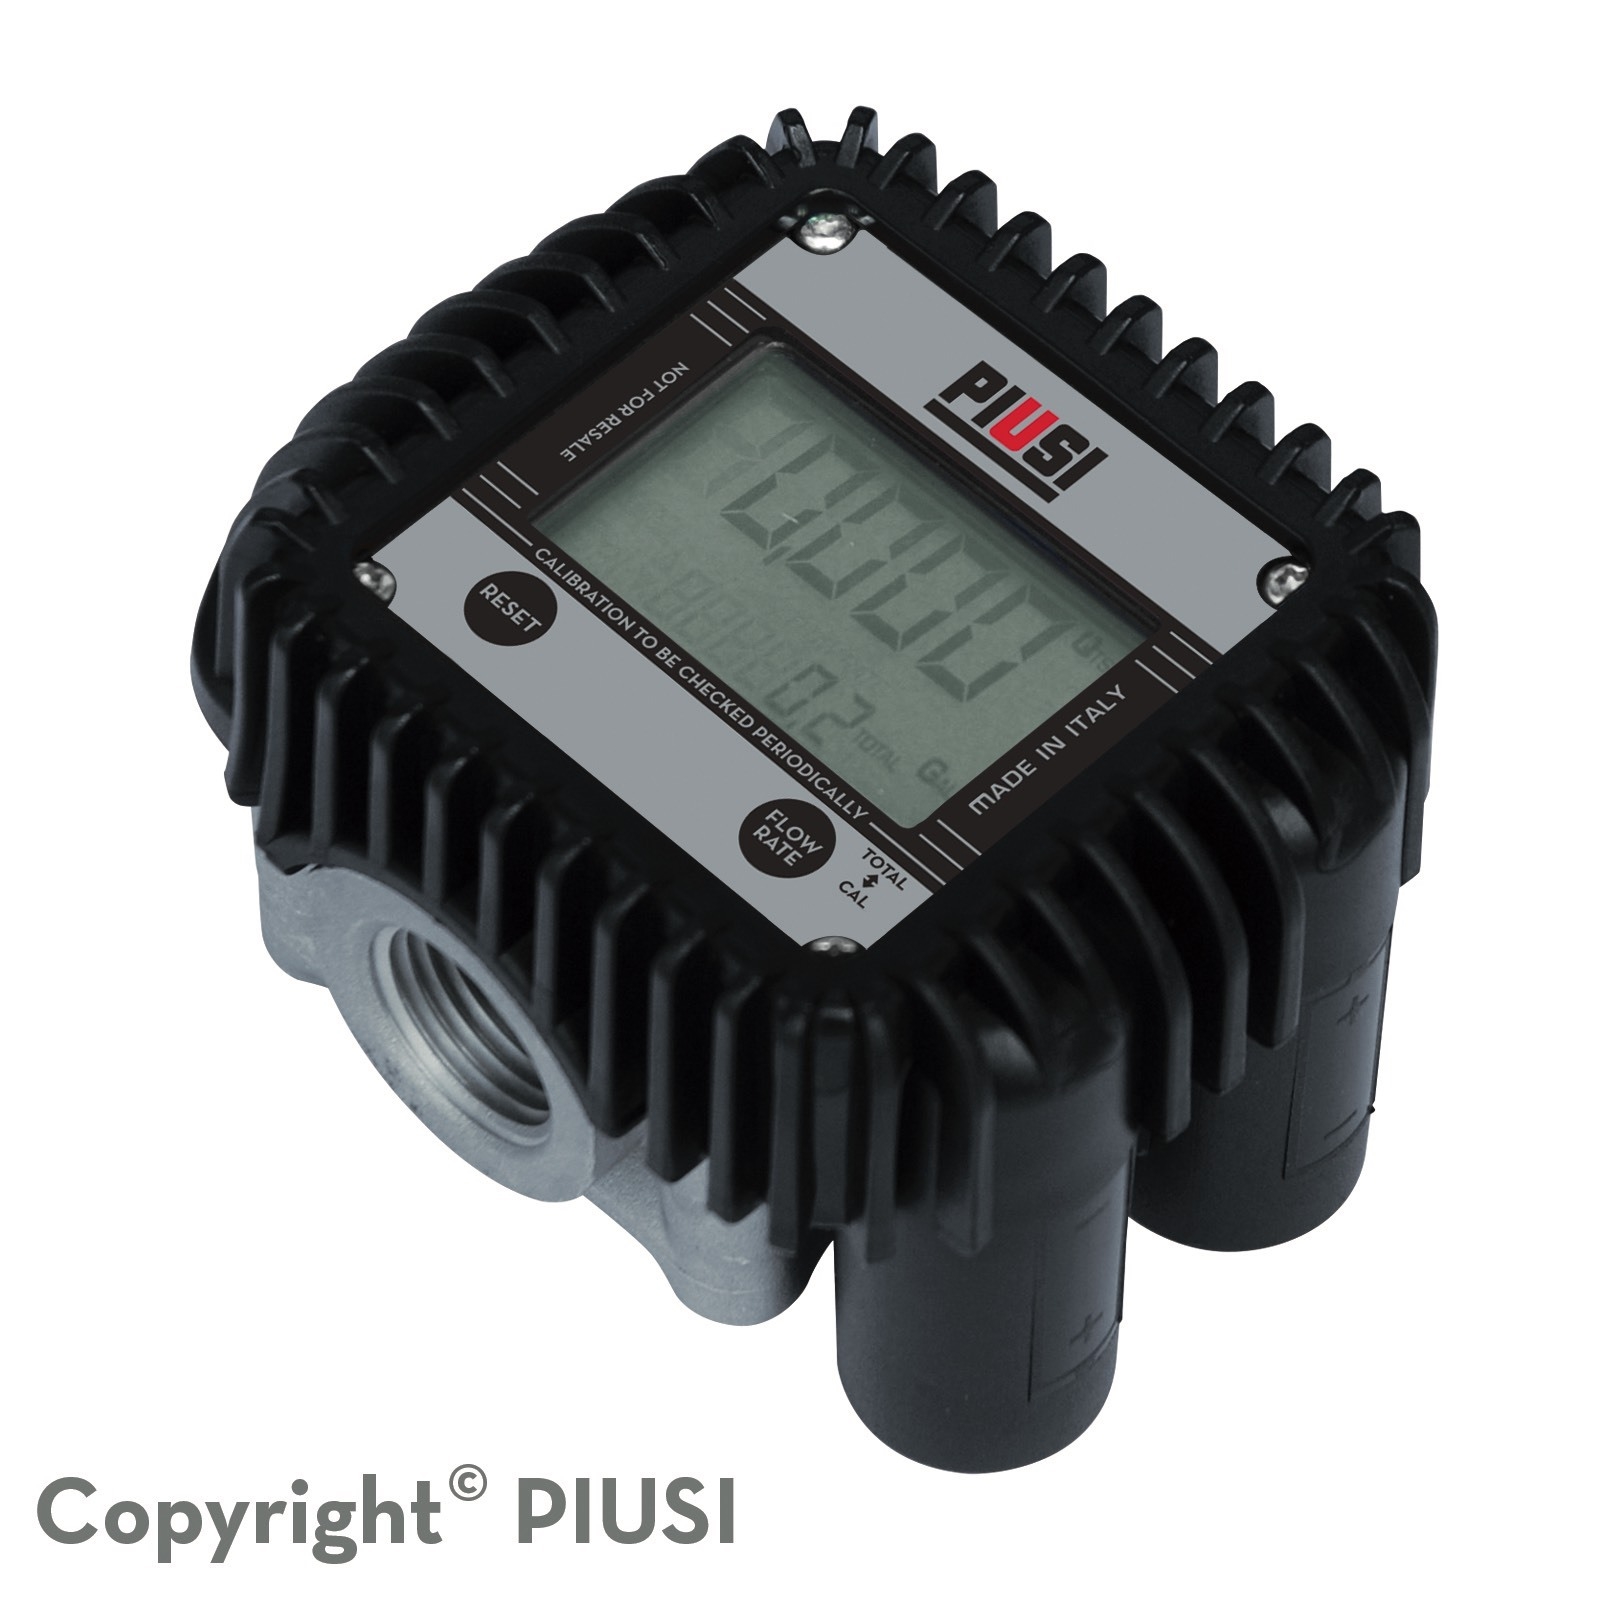 Đồng hồ đo dầu diesel Piusi K400N